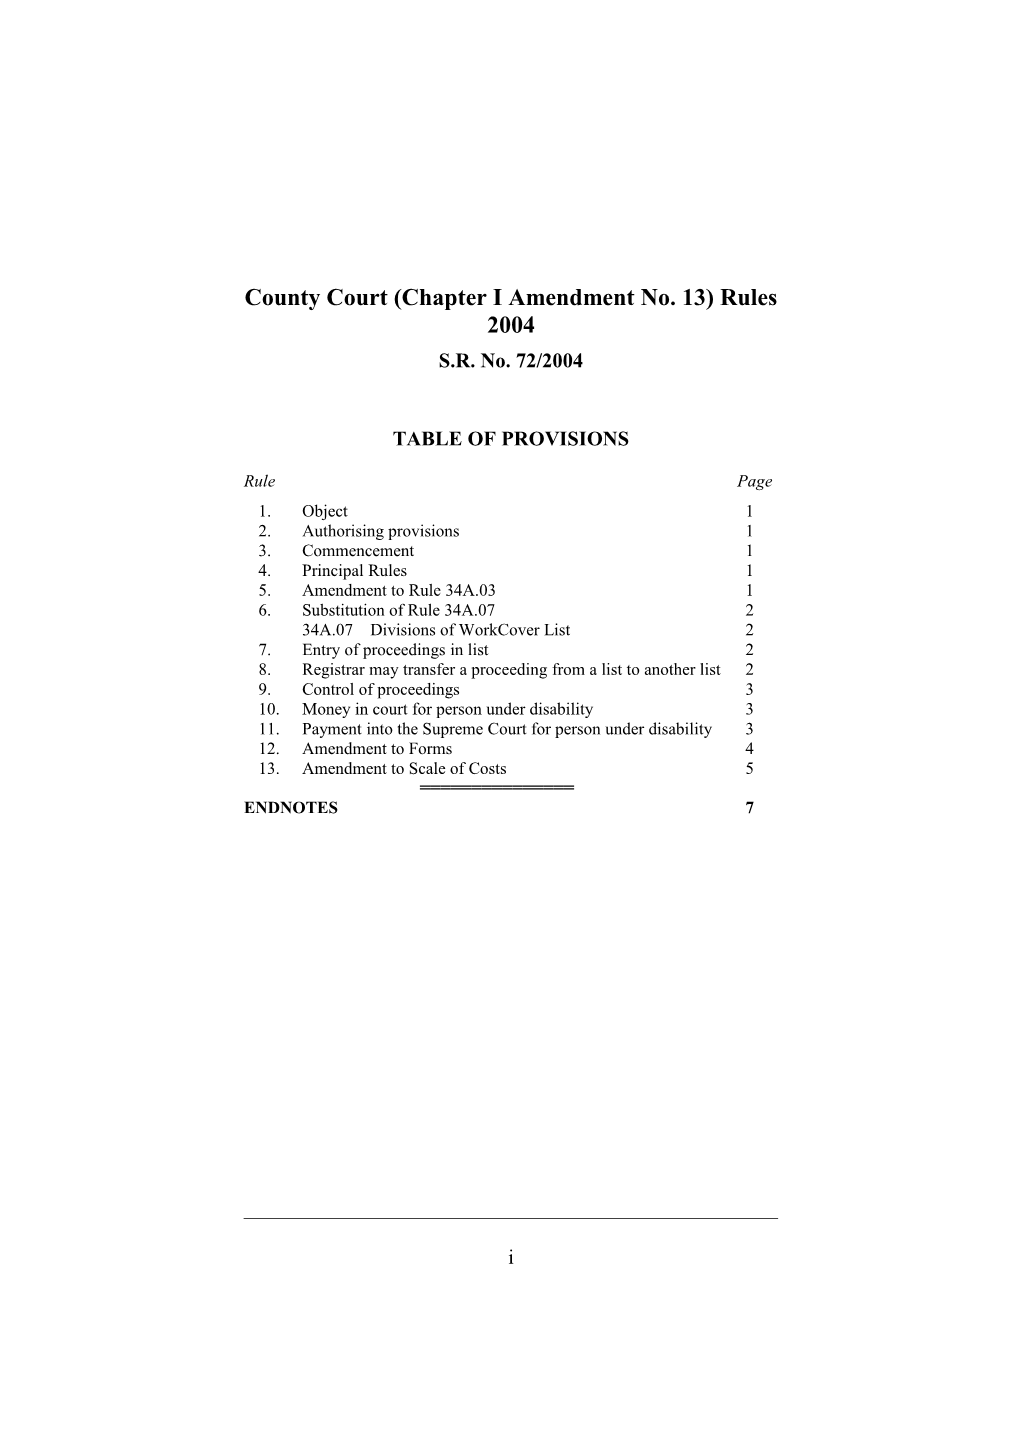 County Court (Chapter I Amendment No. 13) Rules 2004